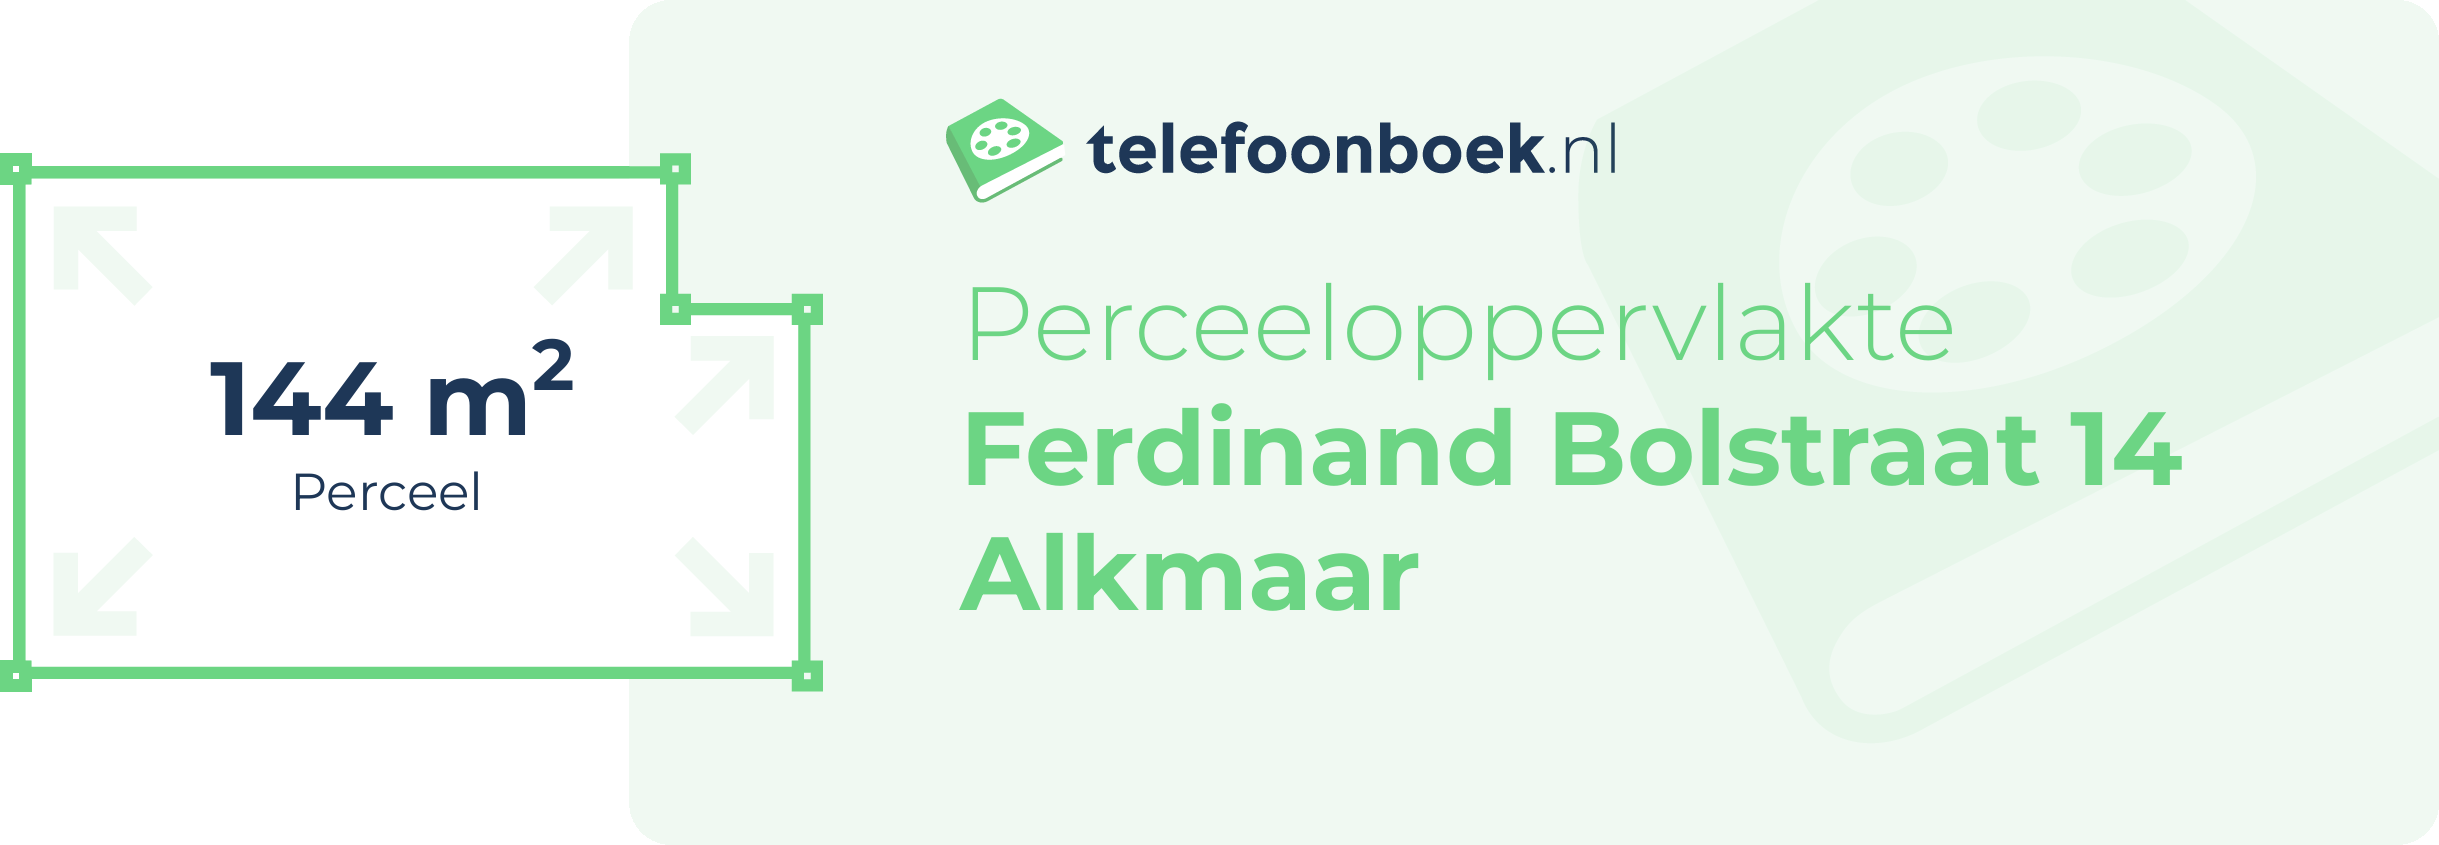 Perceeloppervlakte Ferdinand Bolstraat 14 Alkmaar